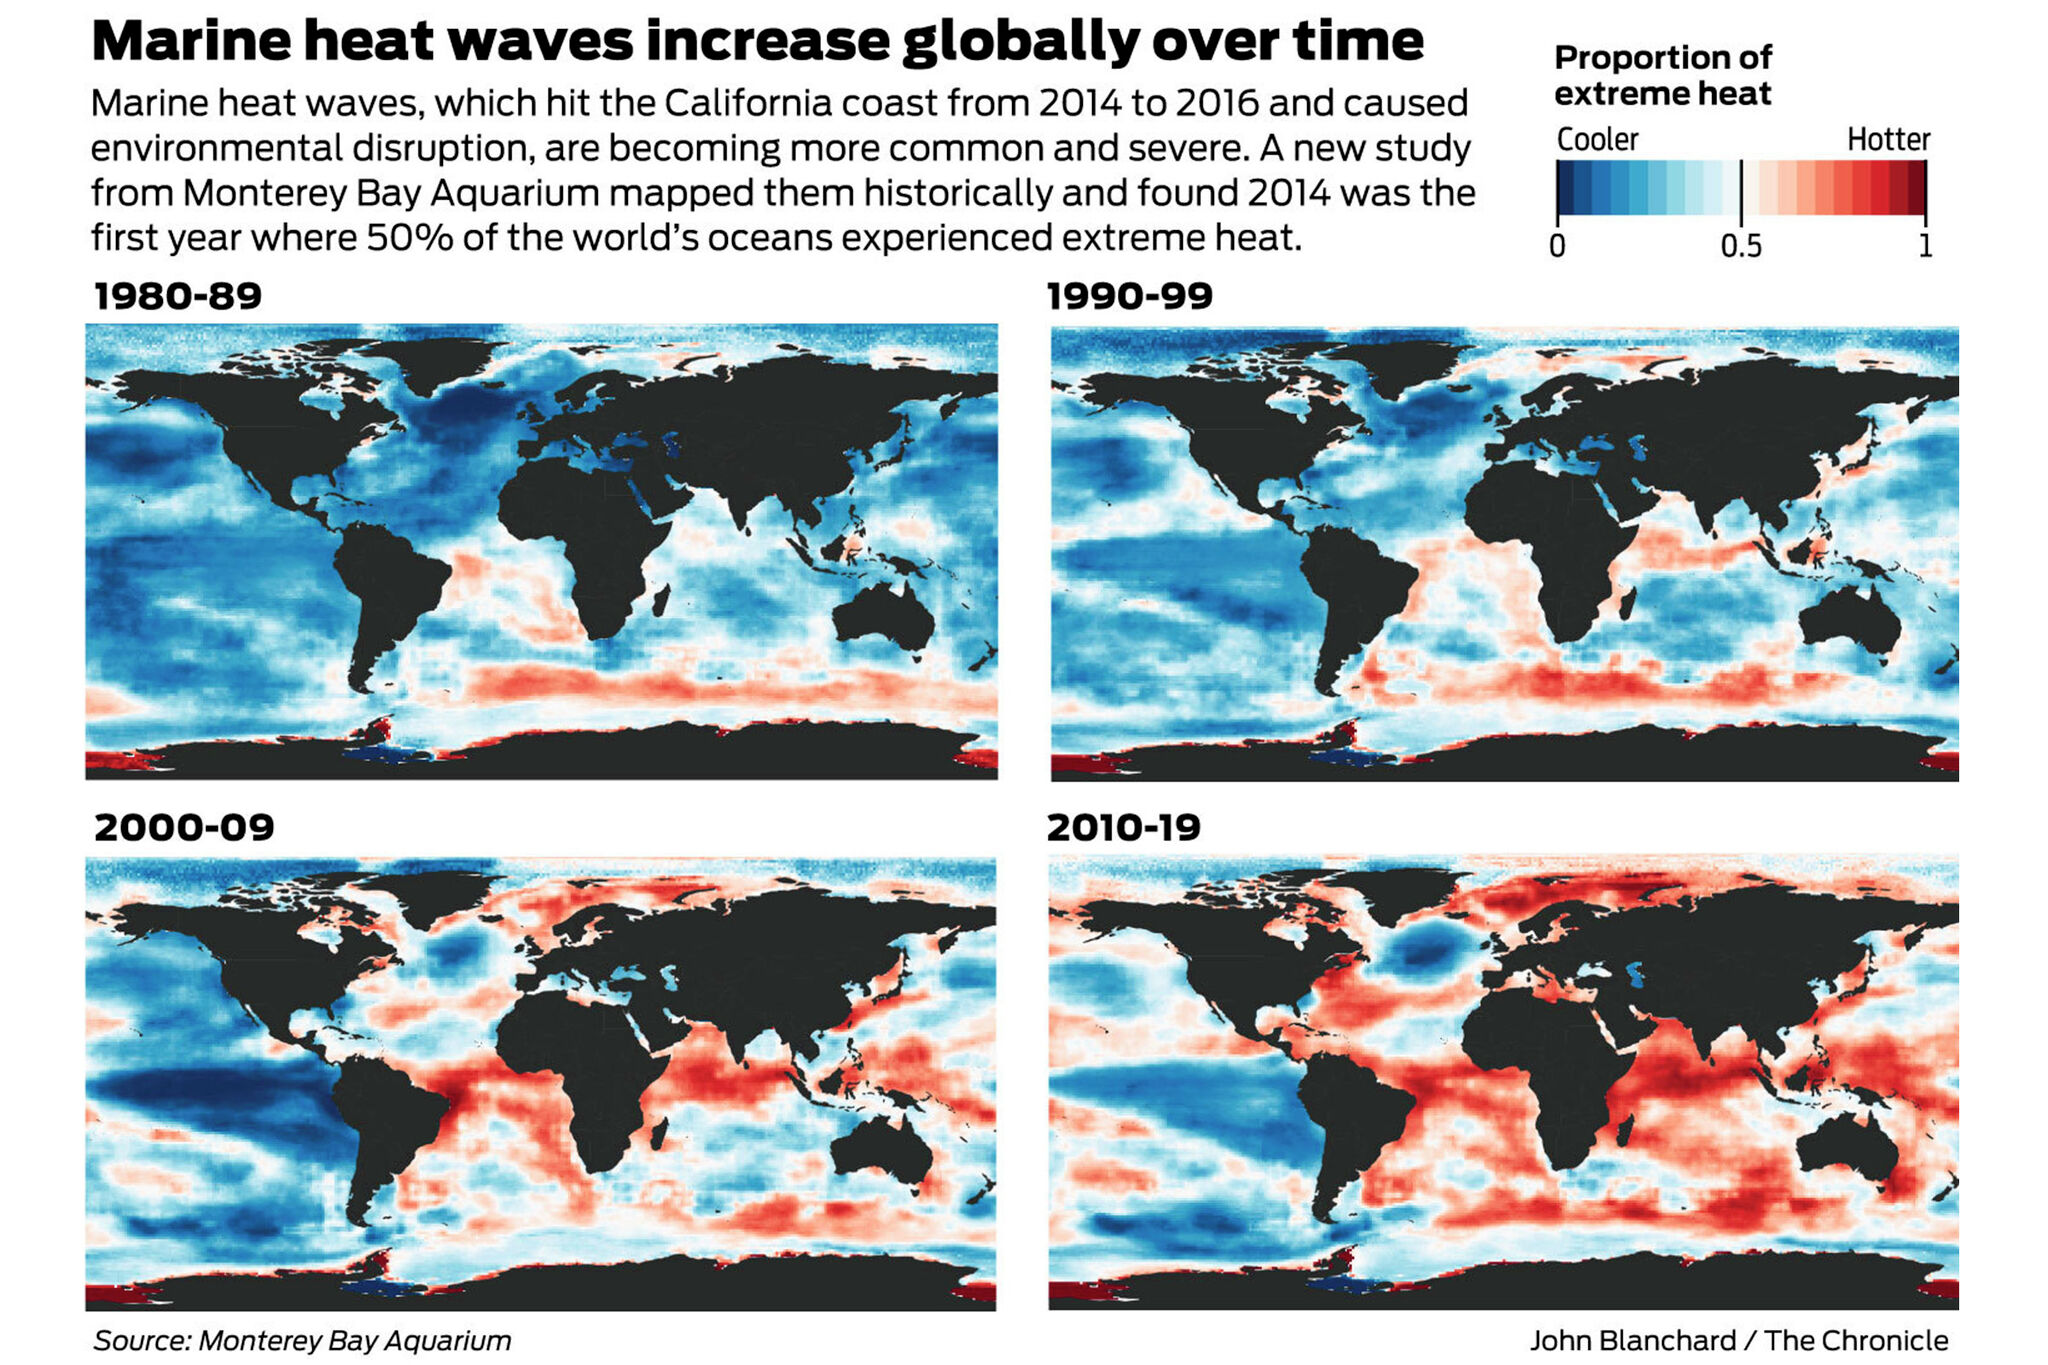 Global warming goes to sea — heat waves hit oceans worldwide